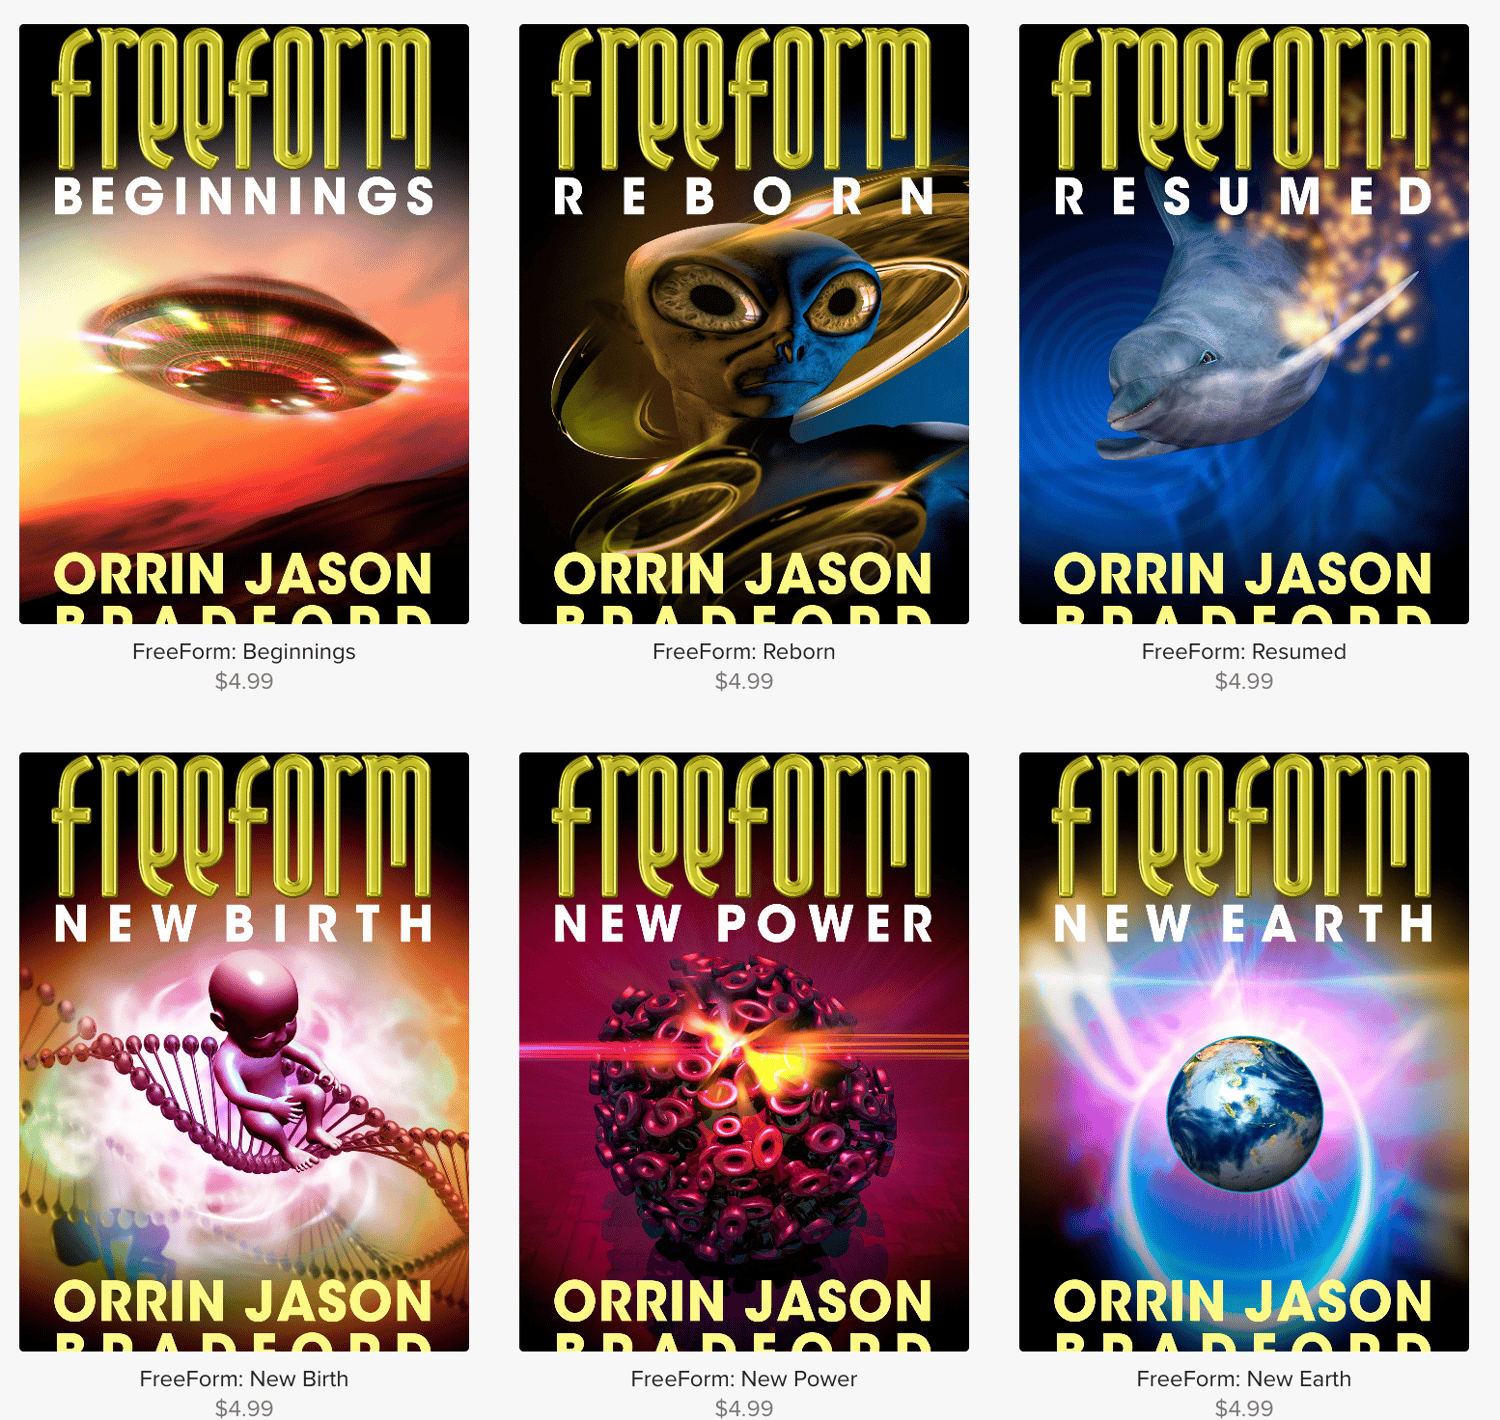 Orrin Jason Bradford Books